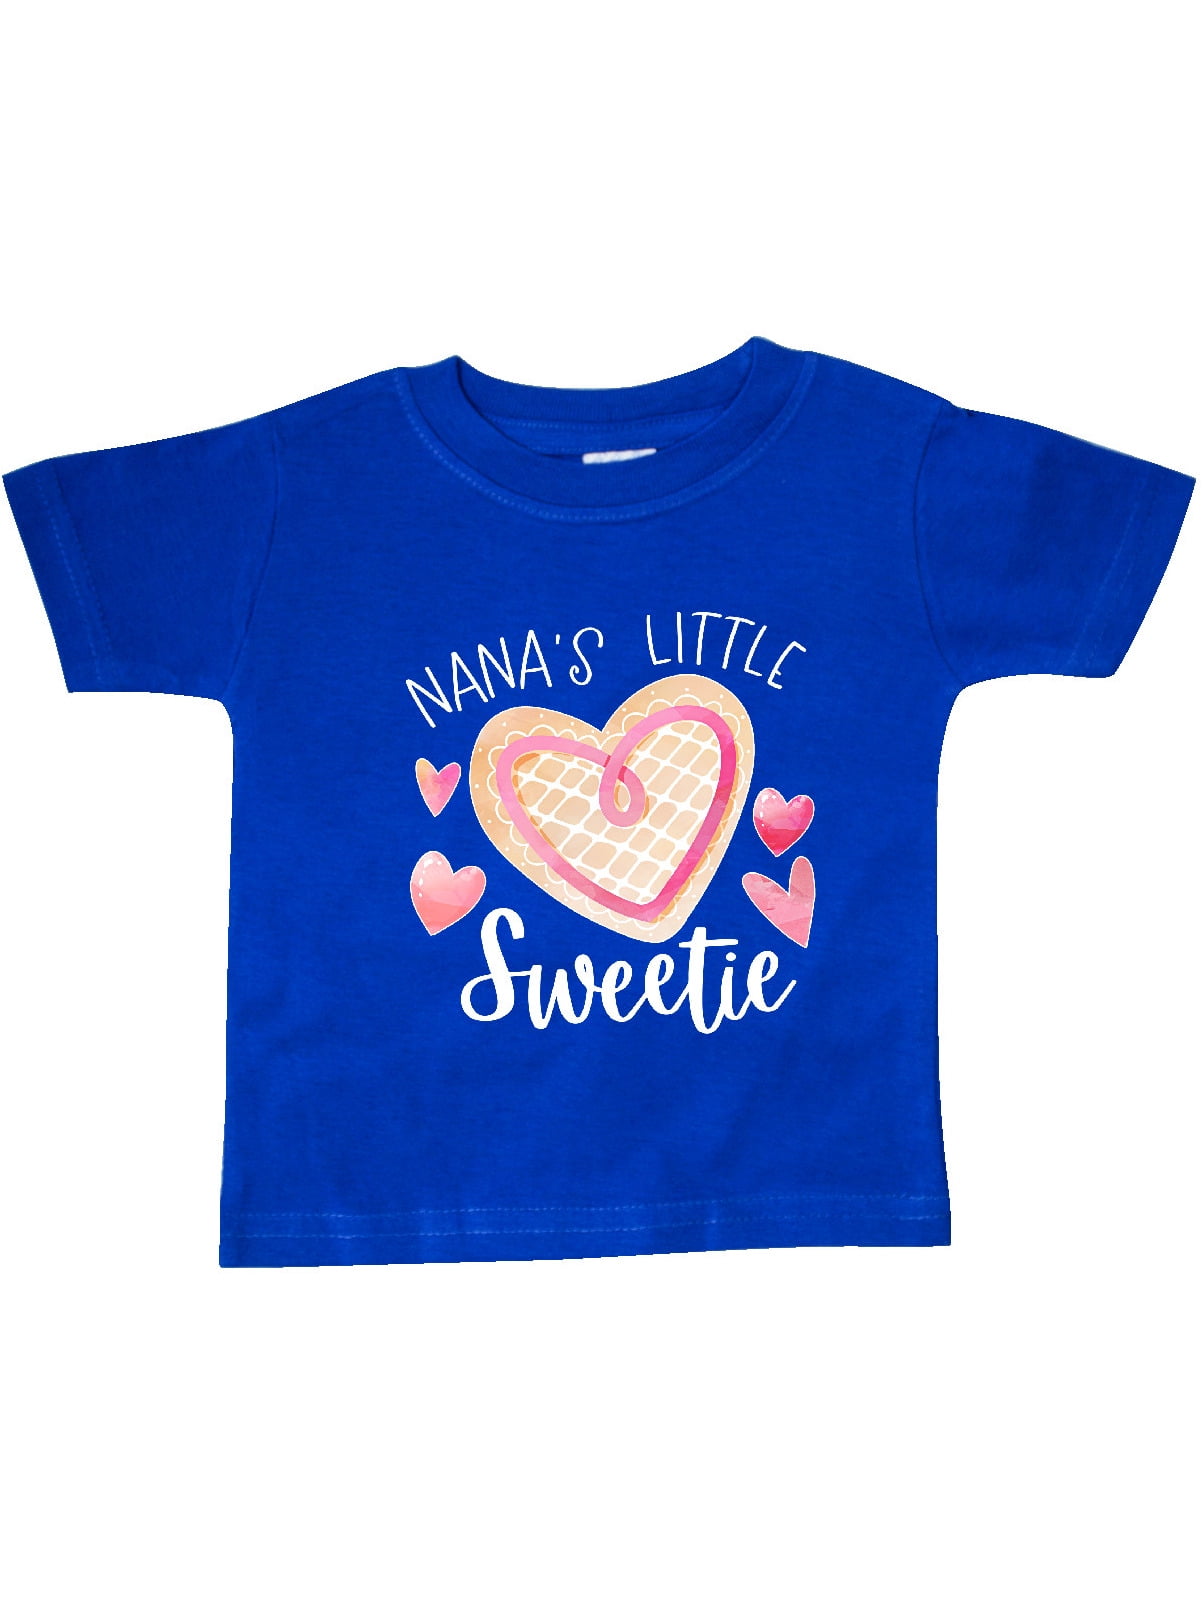 Nana's Little Sweetie with Pink Heart Cookie Baby T-Shirt - Walmart.com ...